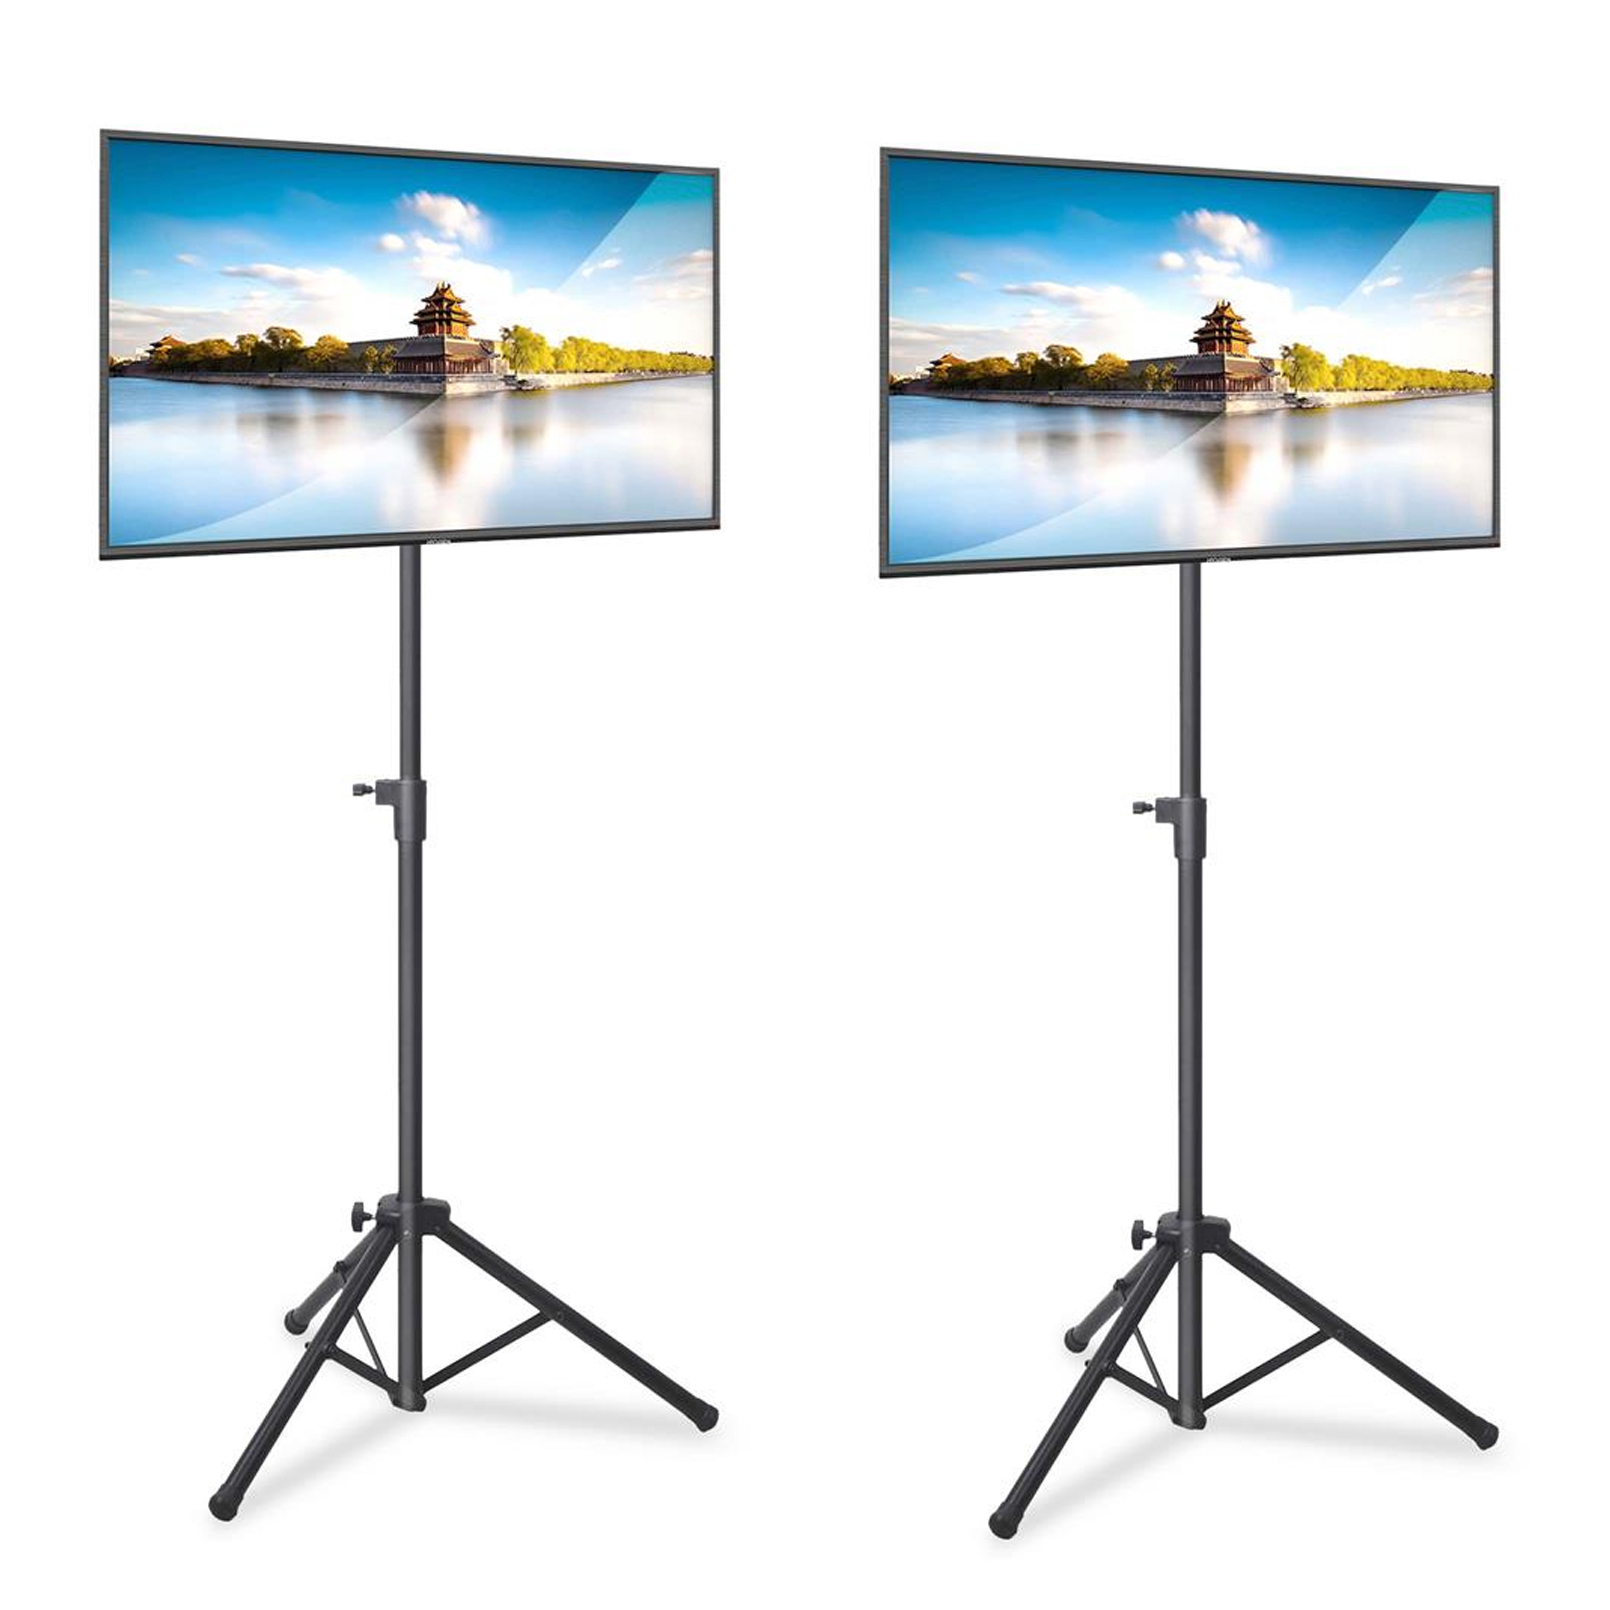 Pyle Foldable Adjustable Height Steel Tripod Flatscreen TV Stand, Black (2 Pack) - image 1 of 8